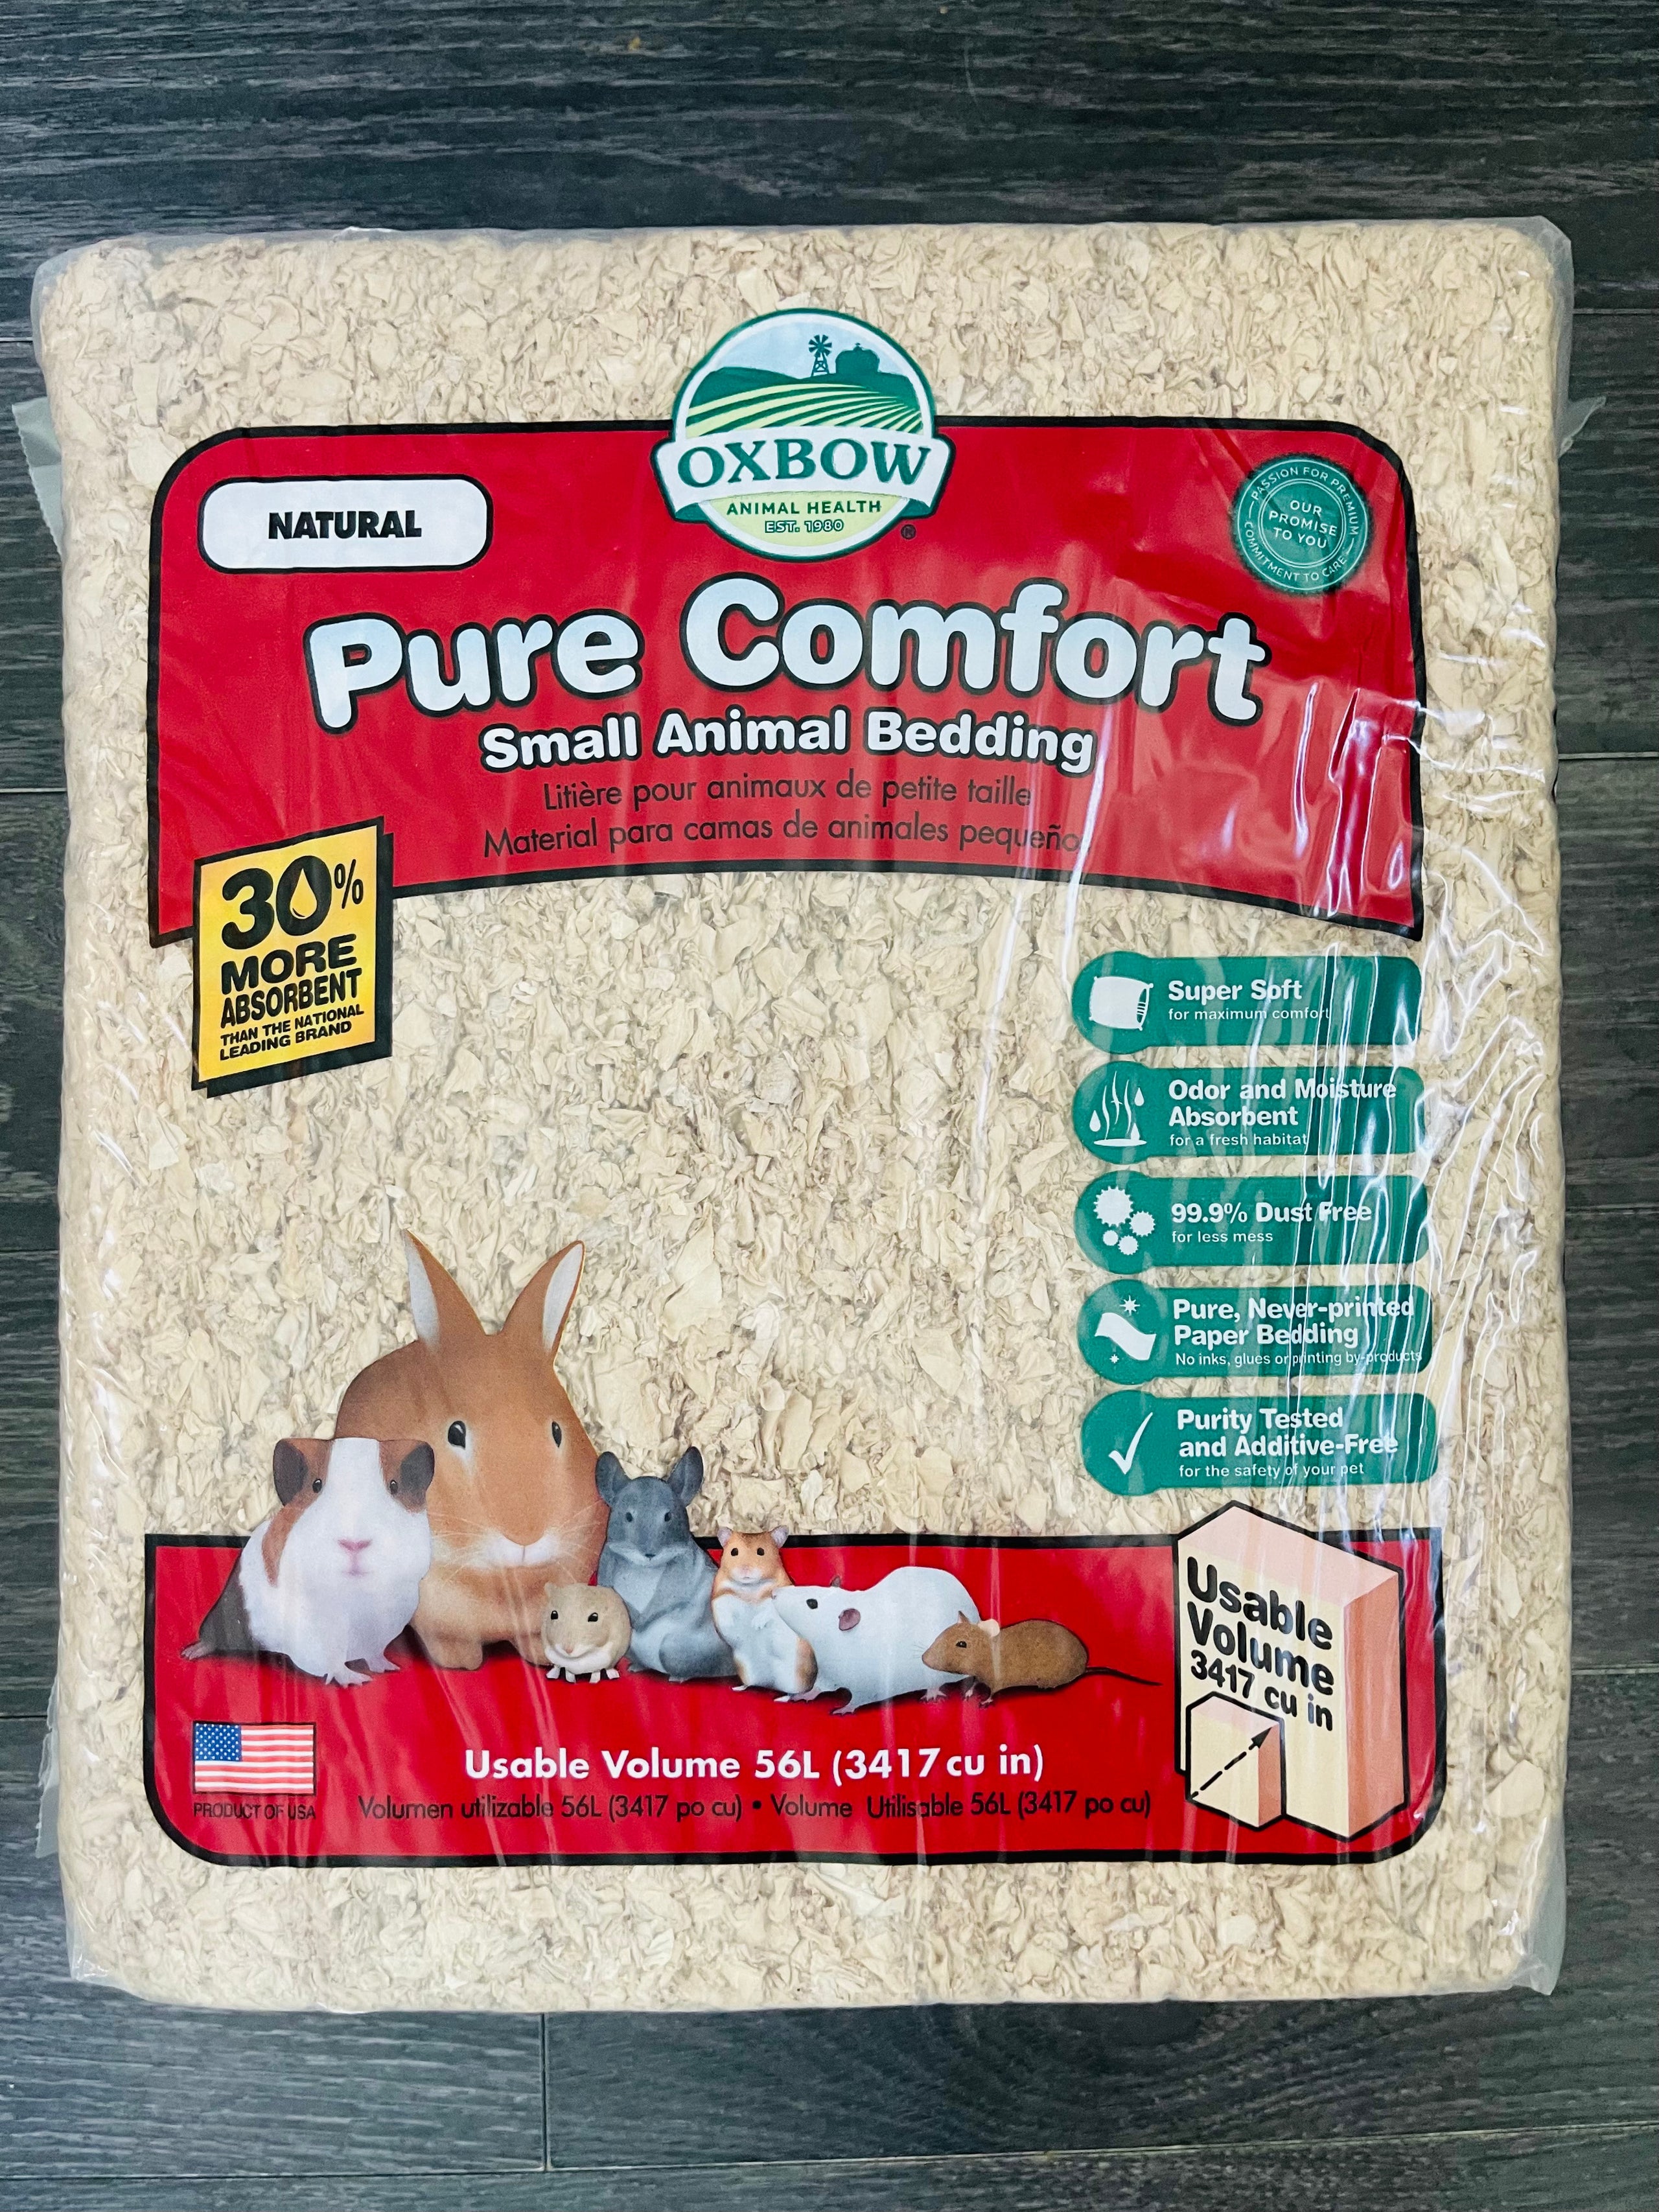 Pure Comfort Natural Bedding - Oxbow Animal Health